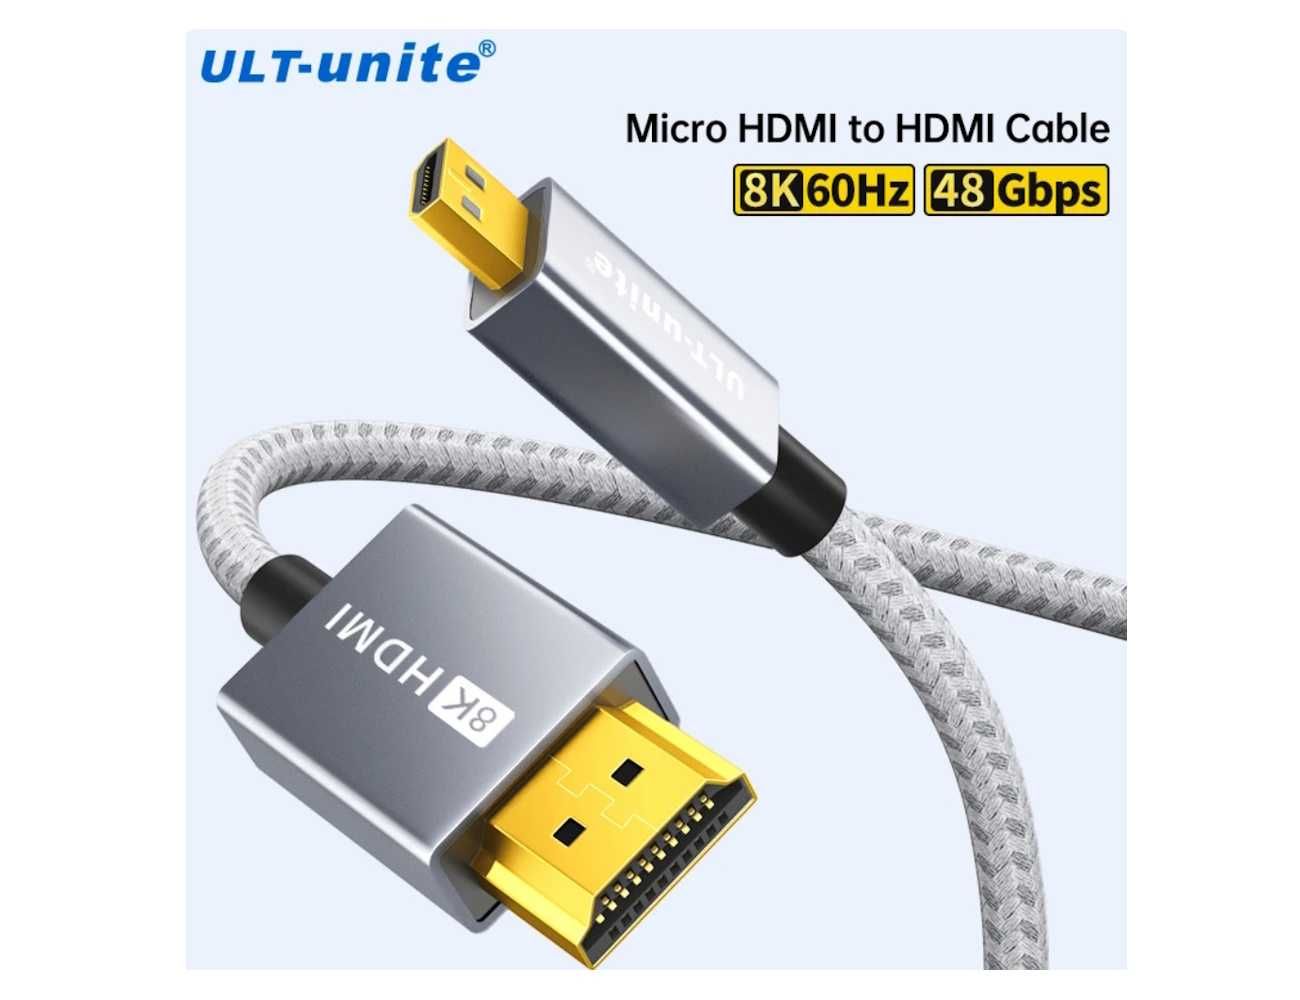 Кабель Micro HDMI to HDMI v2.1 8K 1 метр Grey UltraHD HDR ULT-unite